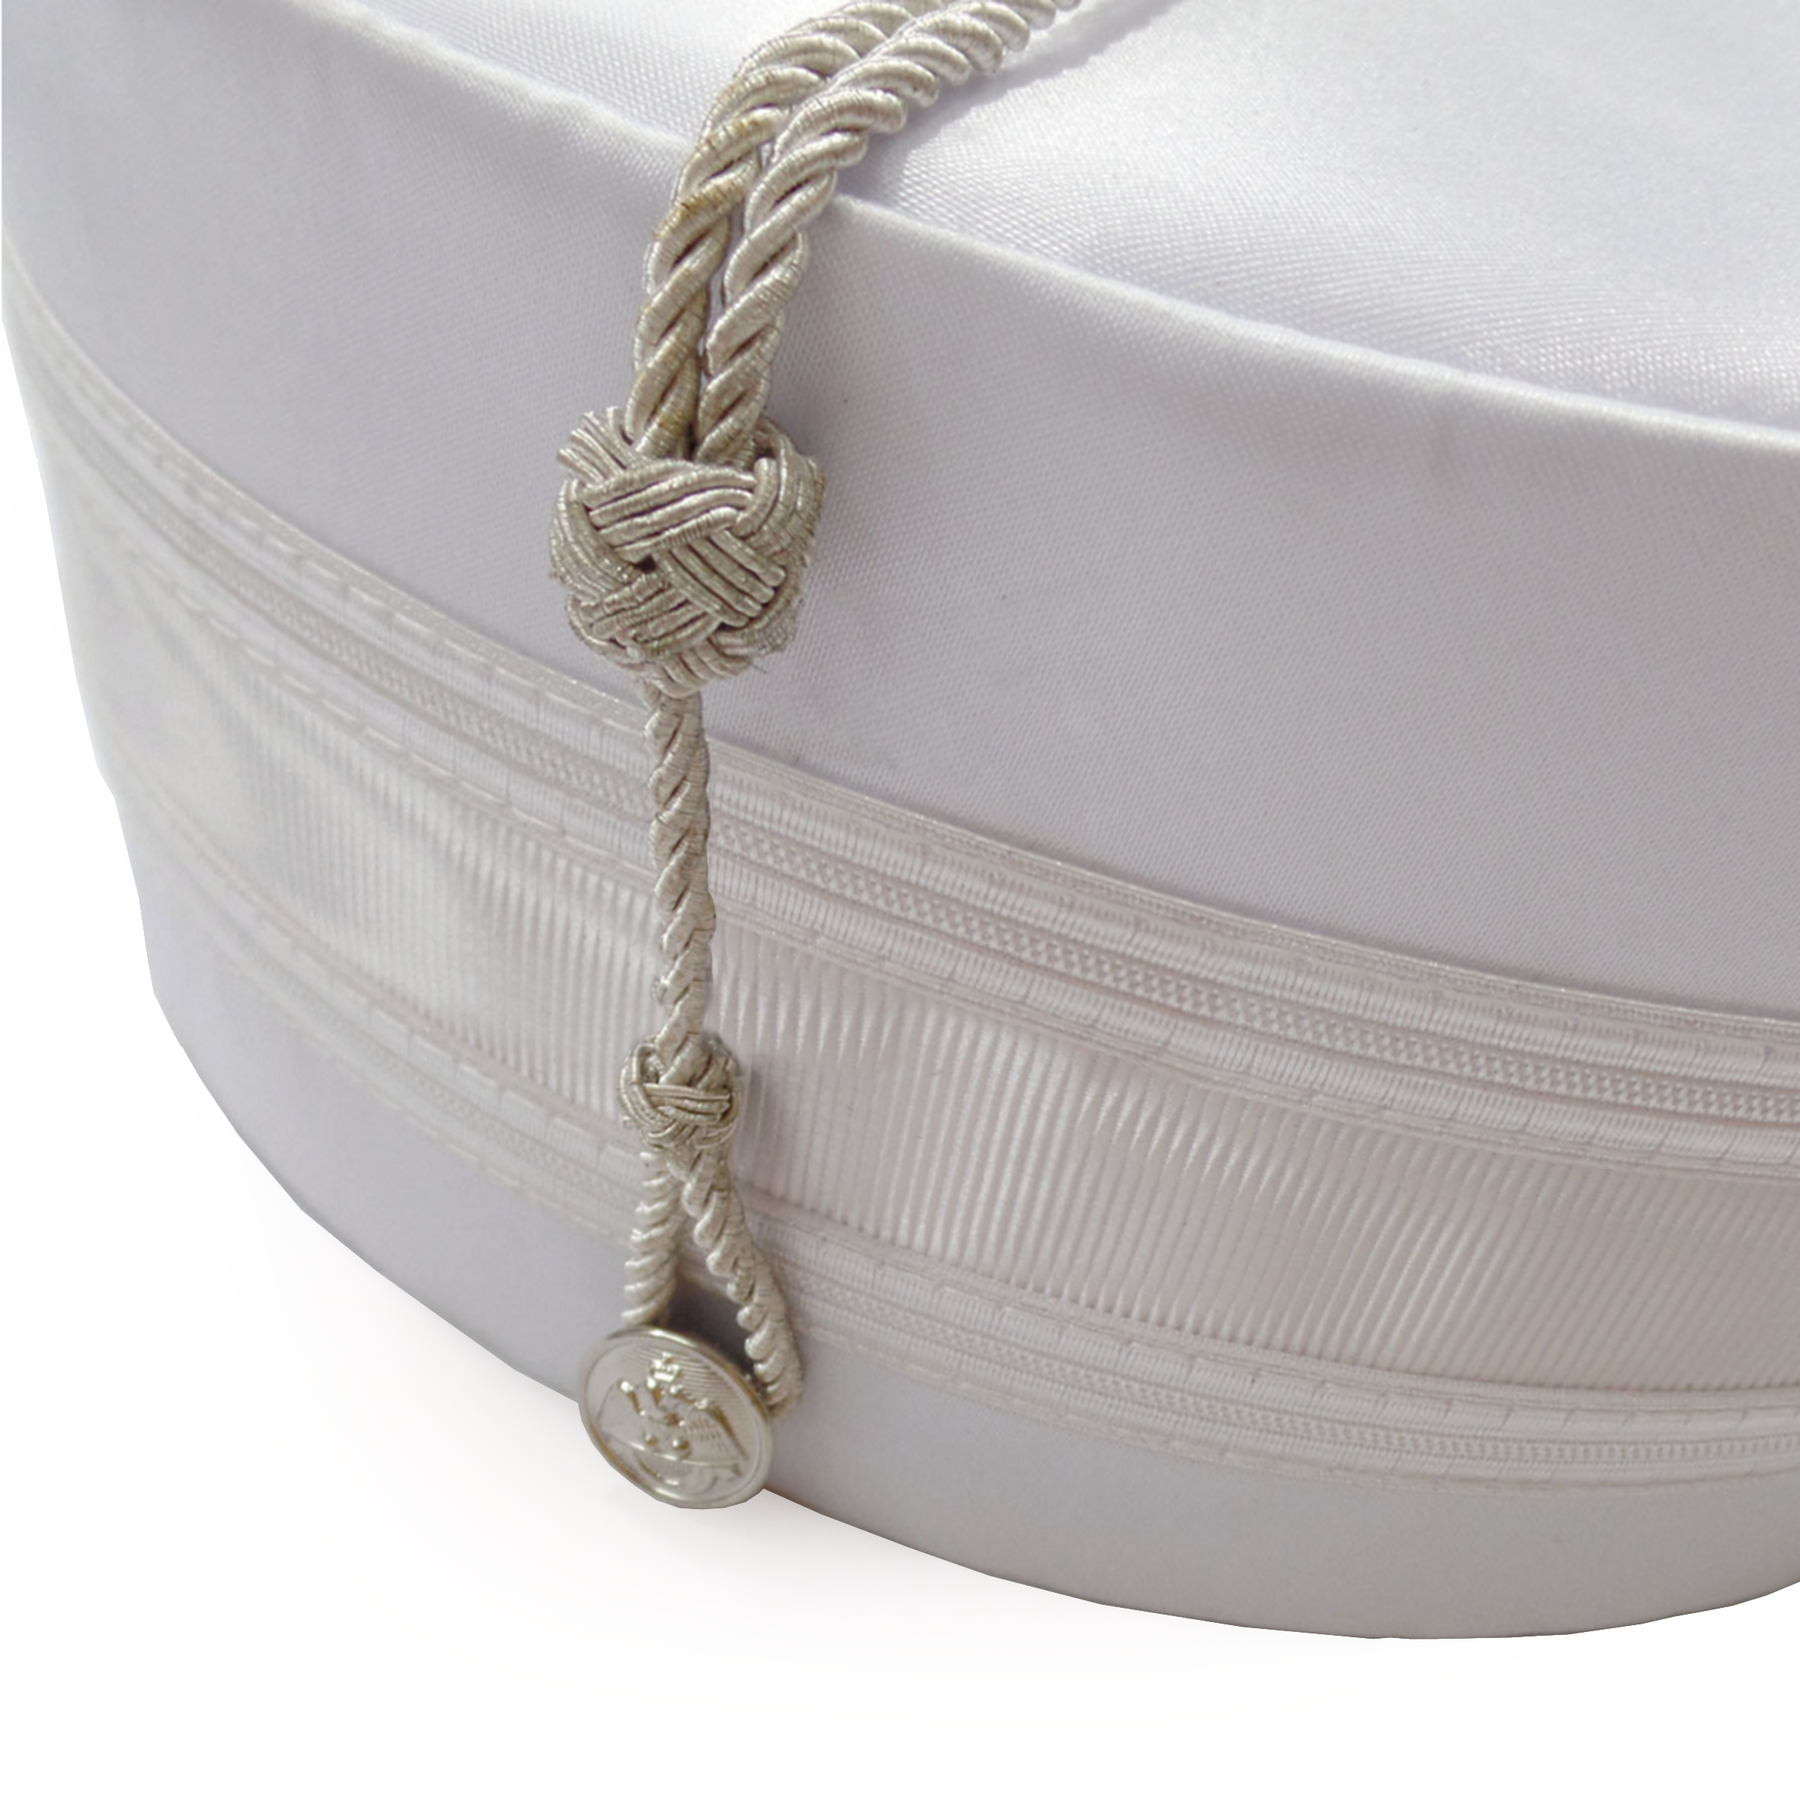 31st Degree Scottish Rite Crown Cap - White with Silver Cap Cord - Bricks Masons